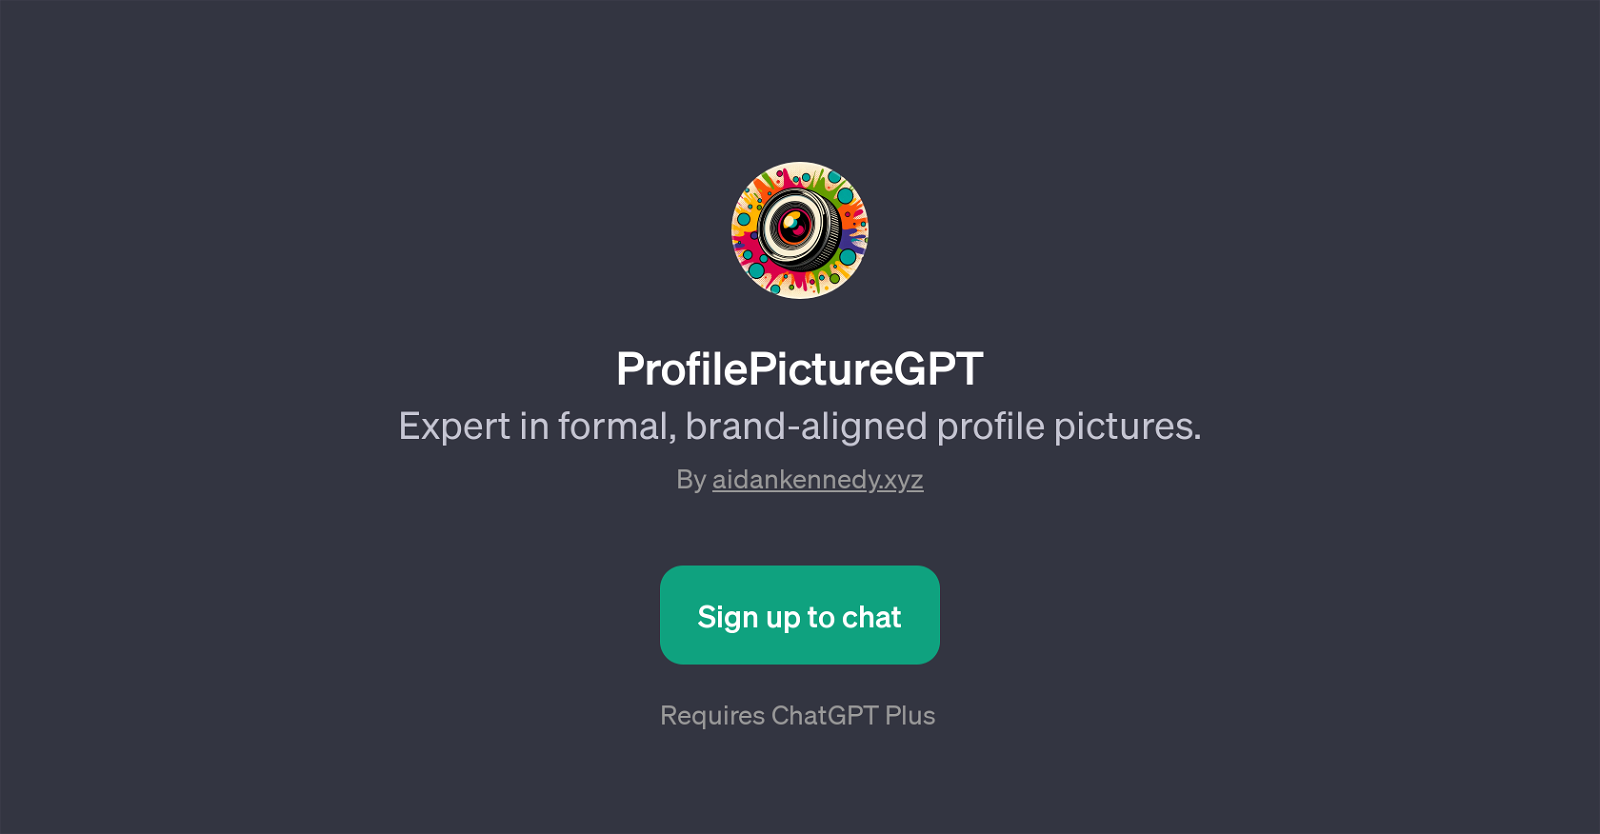 ProfilePictureGPT website